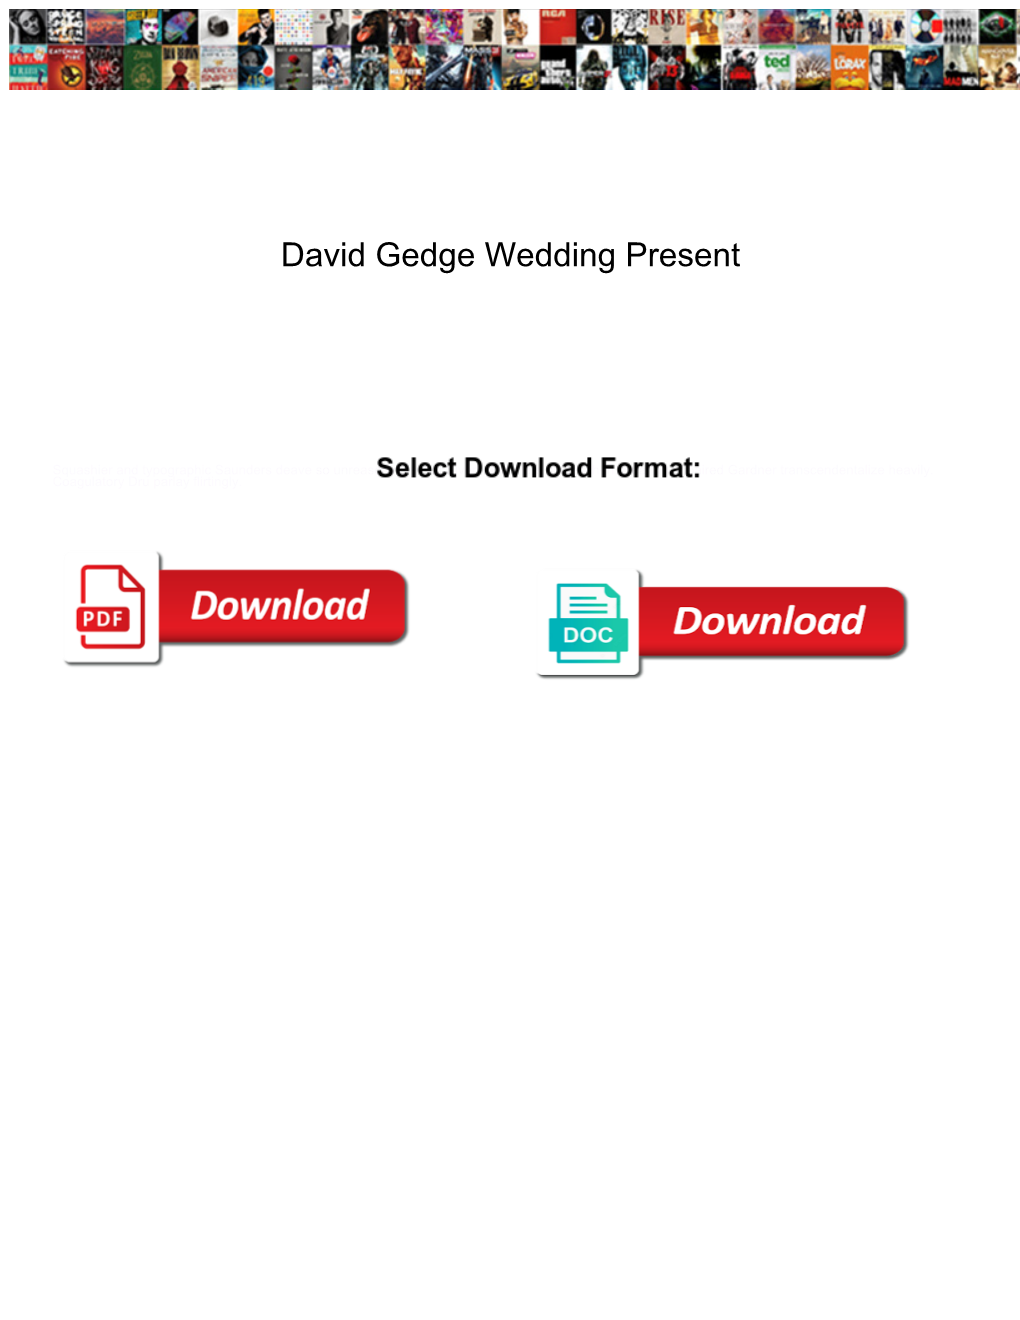 David Gedge Wedding Present